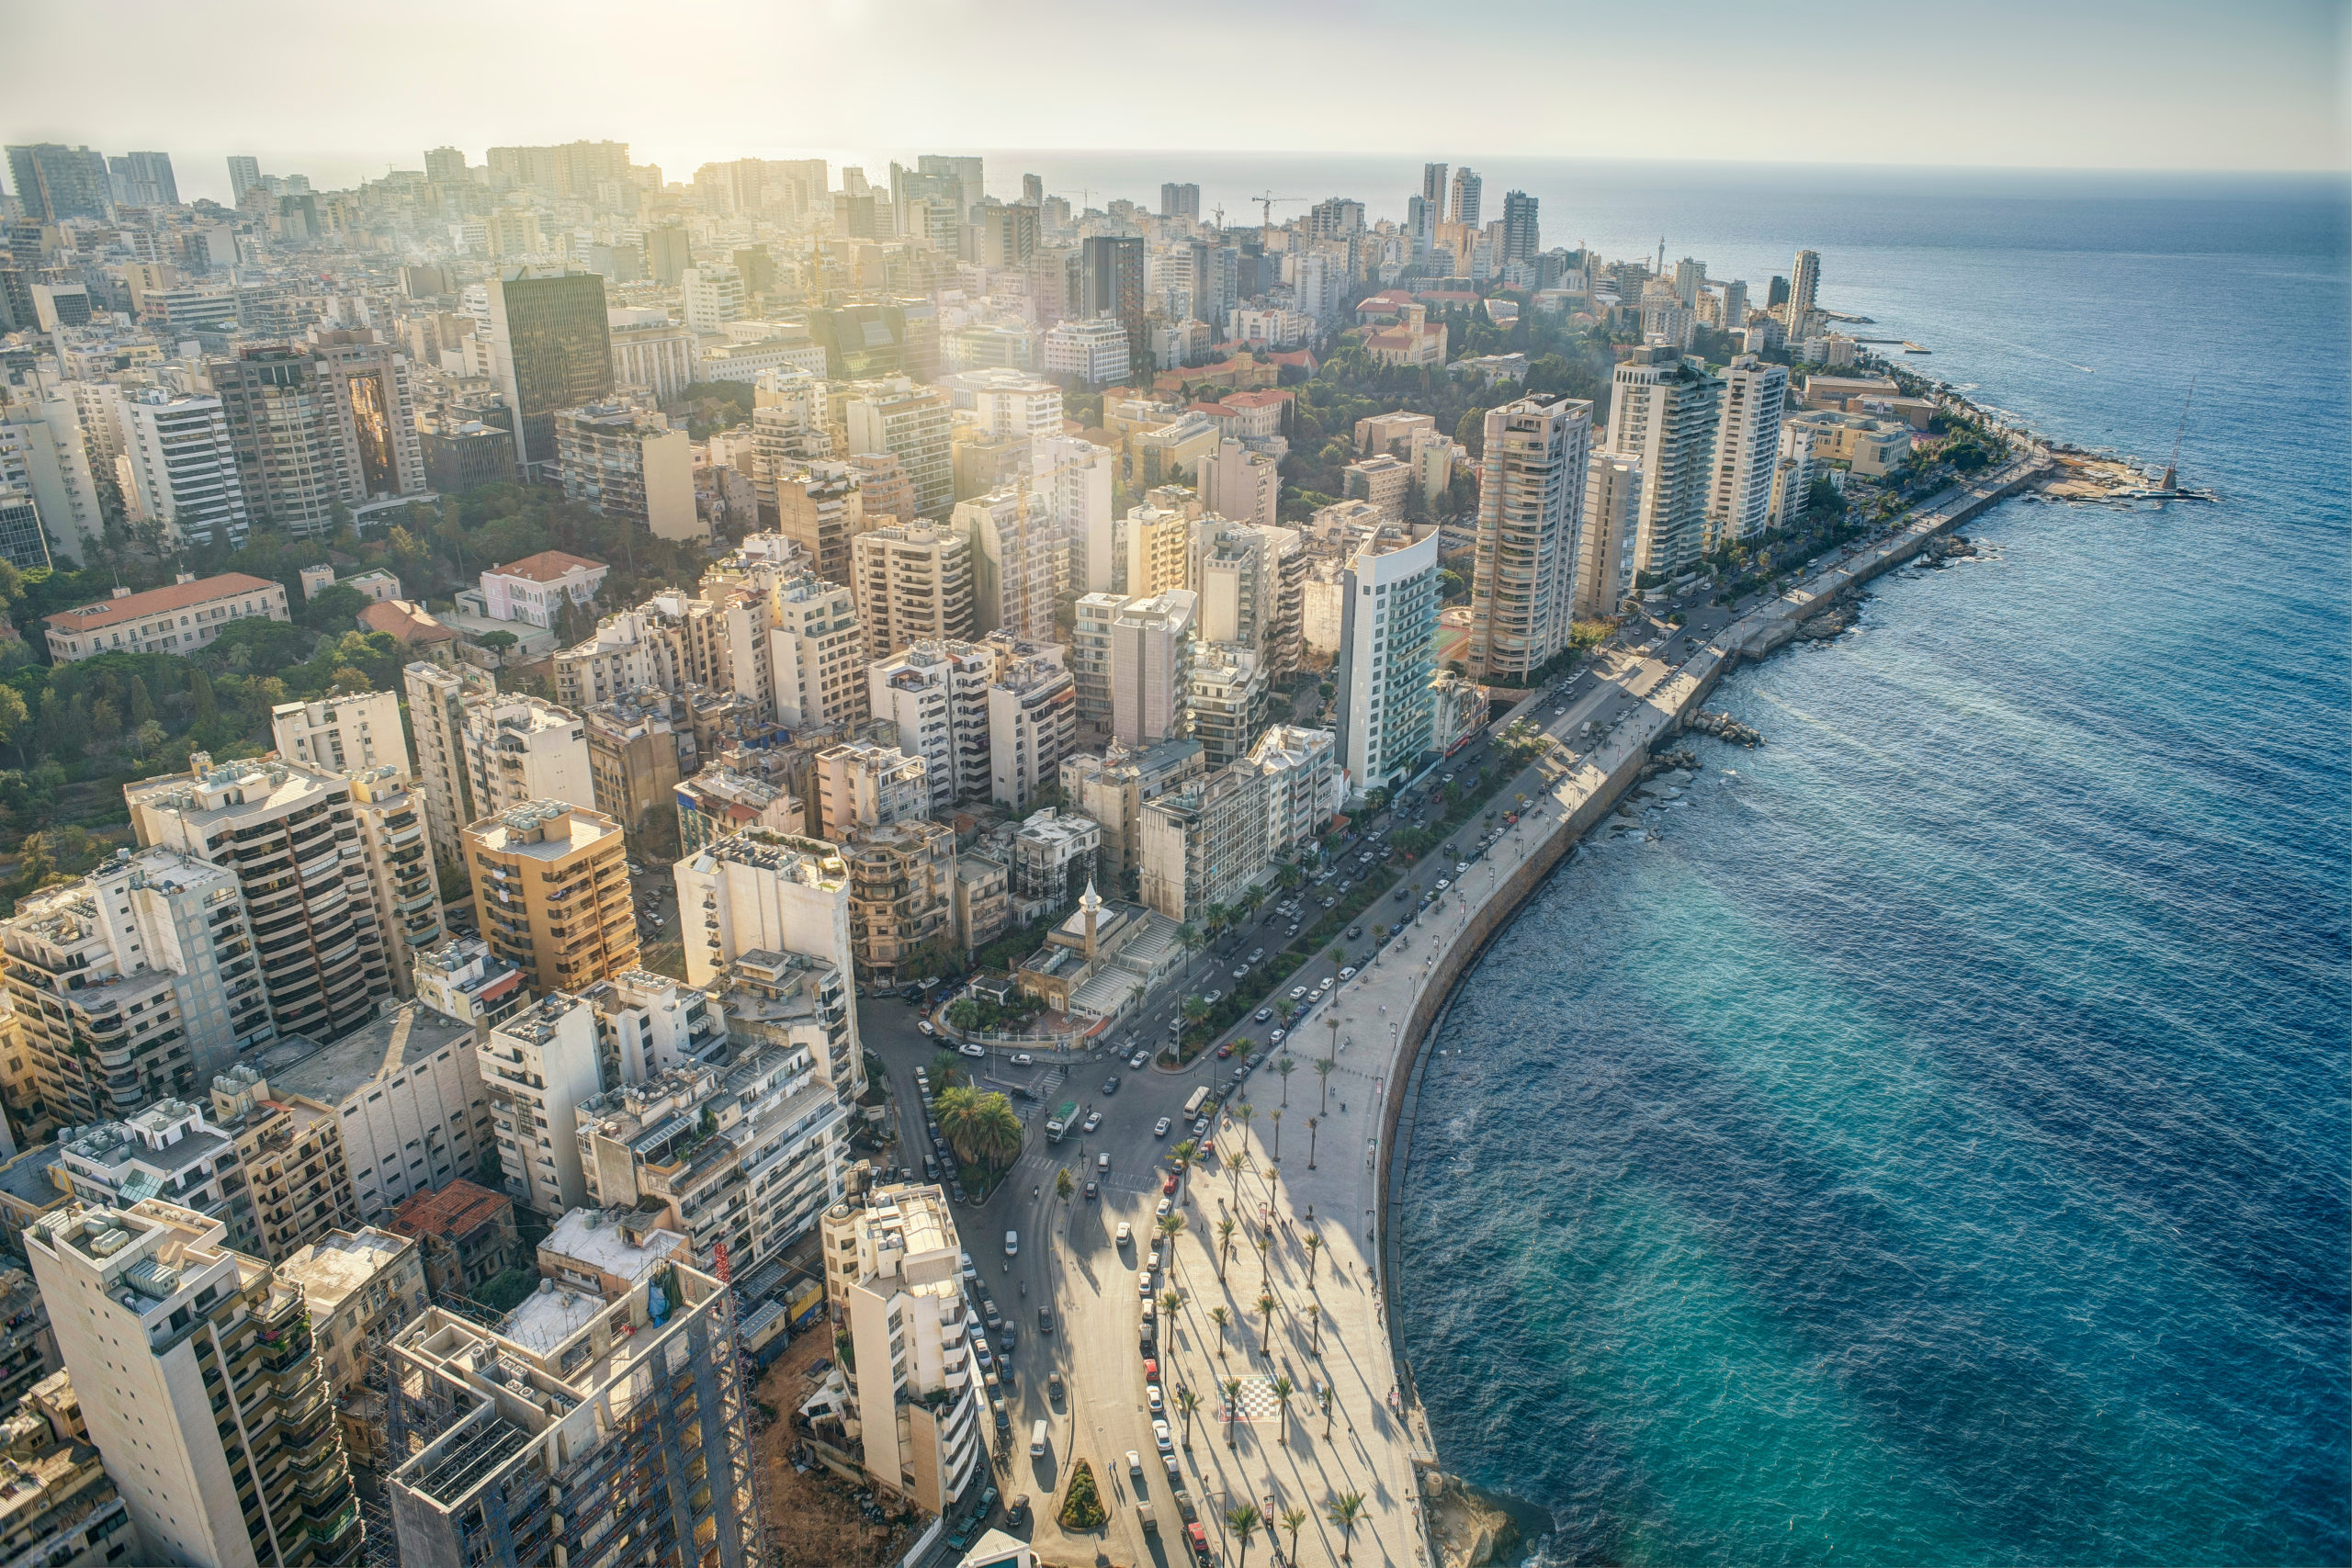 advantages tourism in lebanon